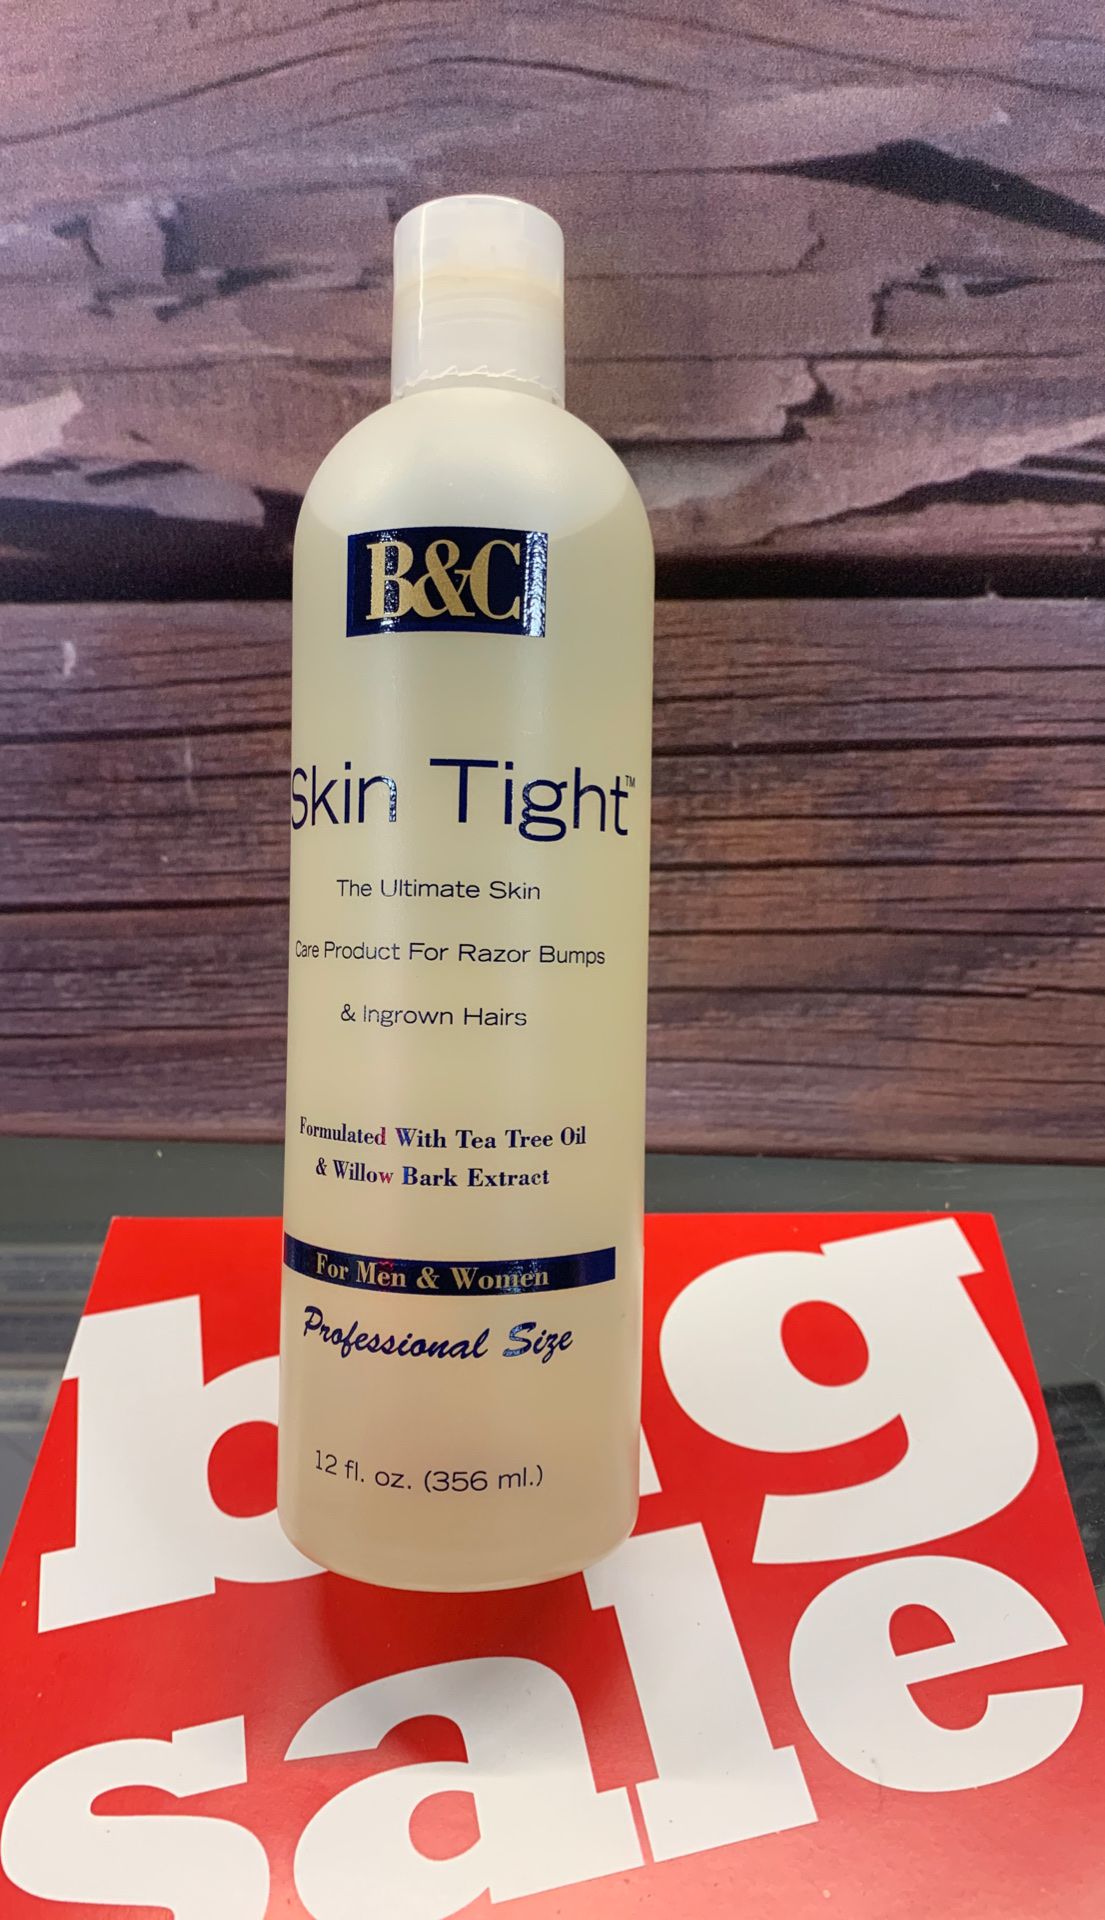 B&C skin tight 12 fl oz for razor bumps and ungrown hair